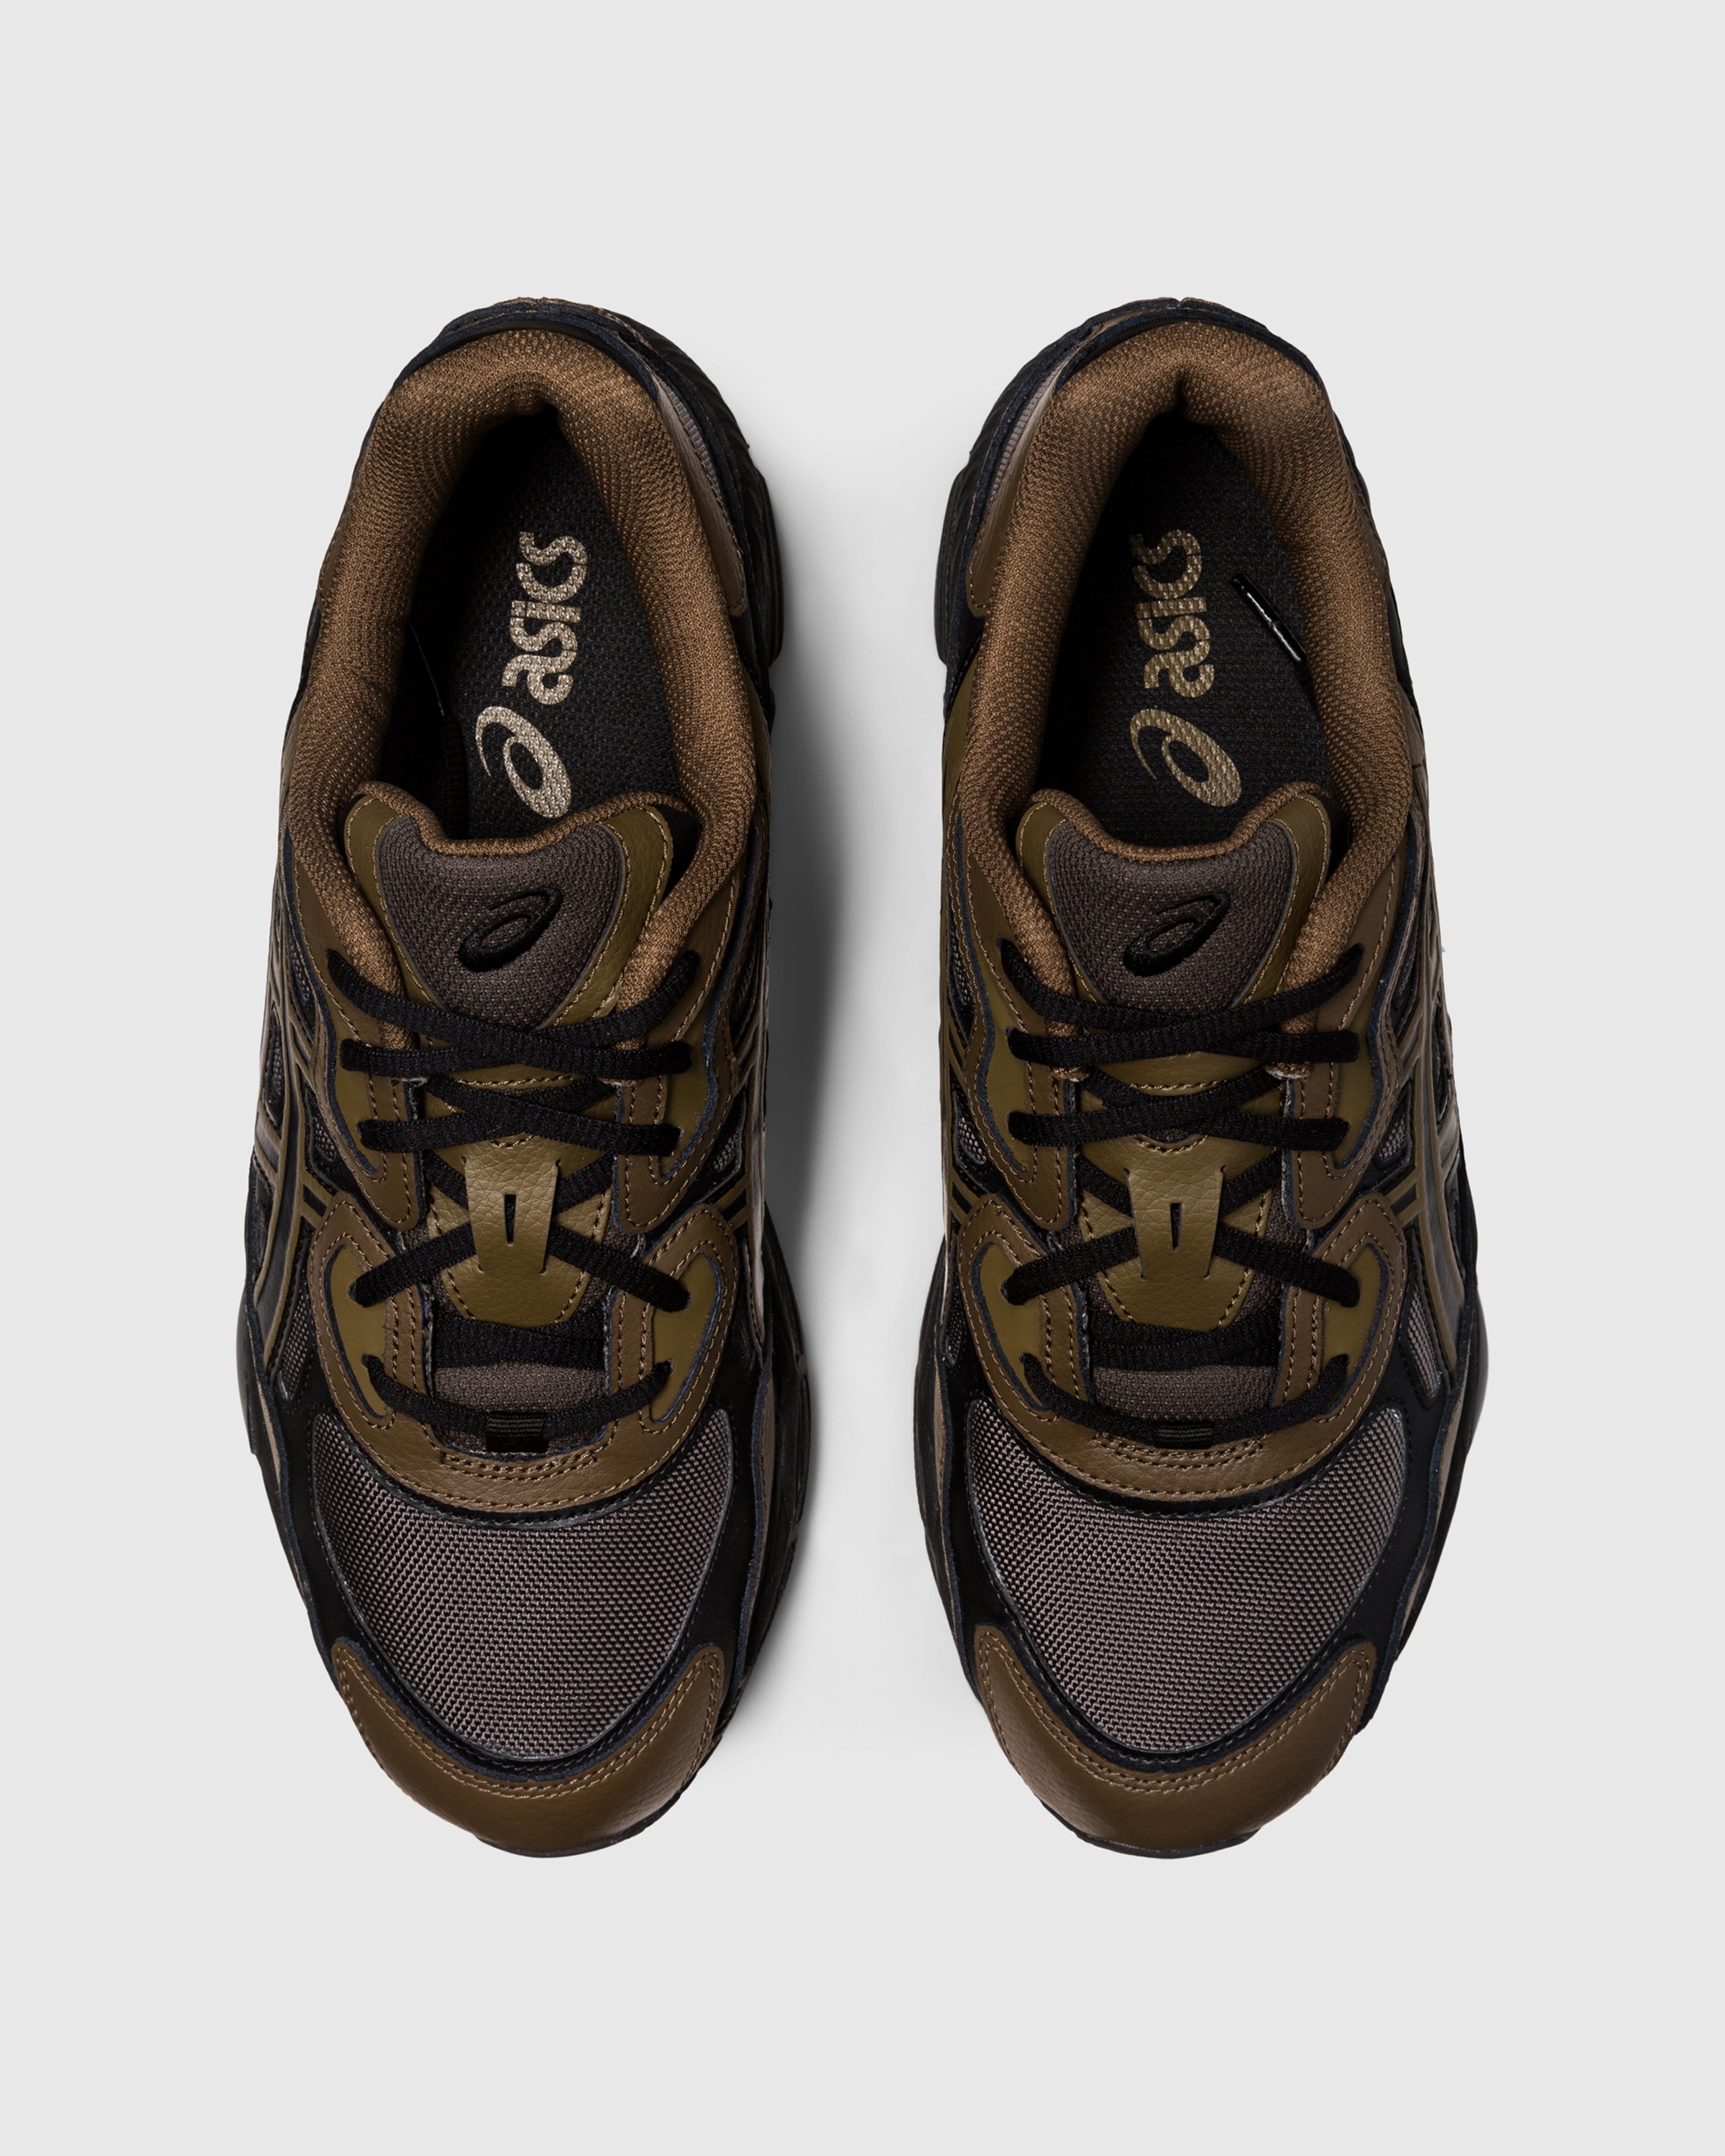 asics - GEL-NYC Dark Sepia/Clay Canyon - Footwear - Multi - Image 5